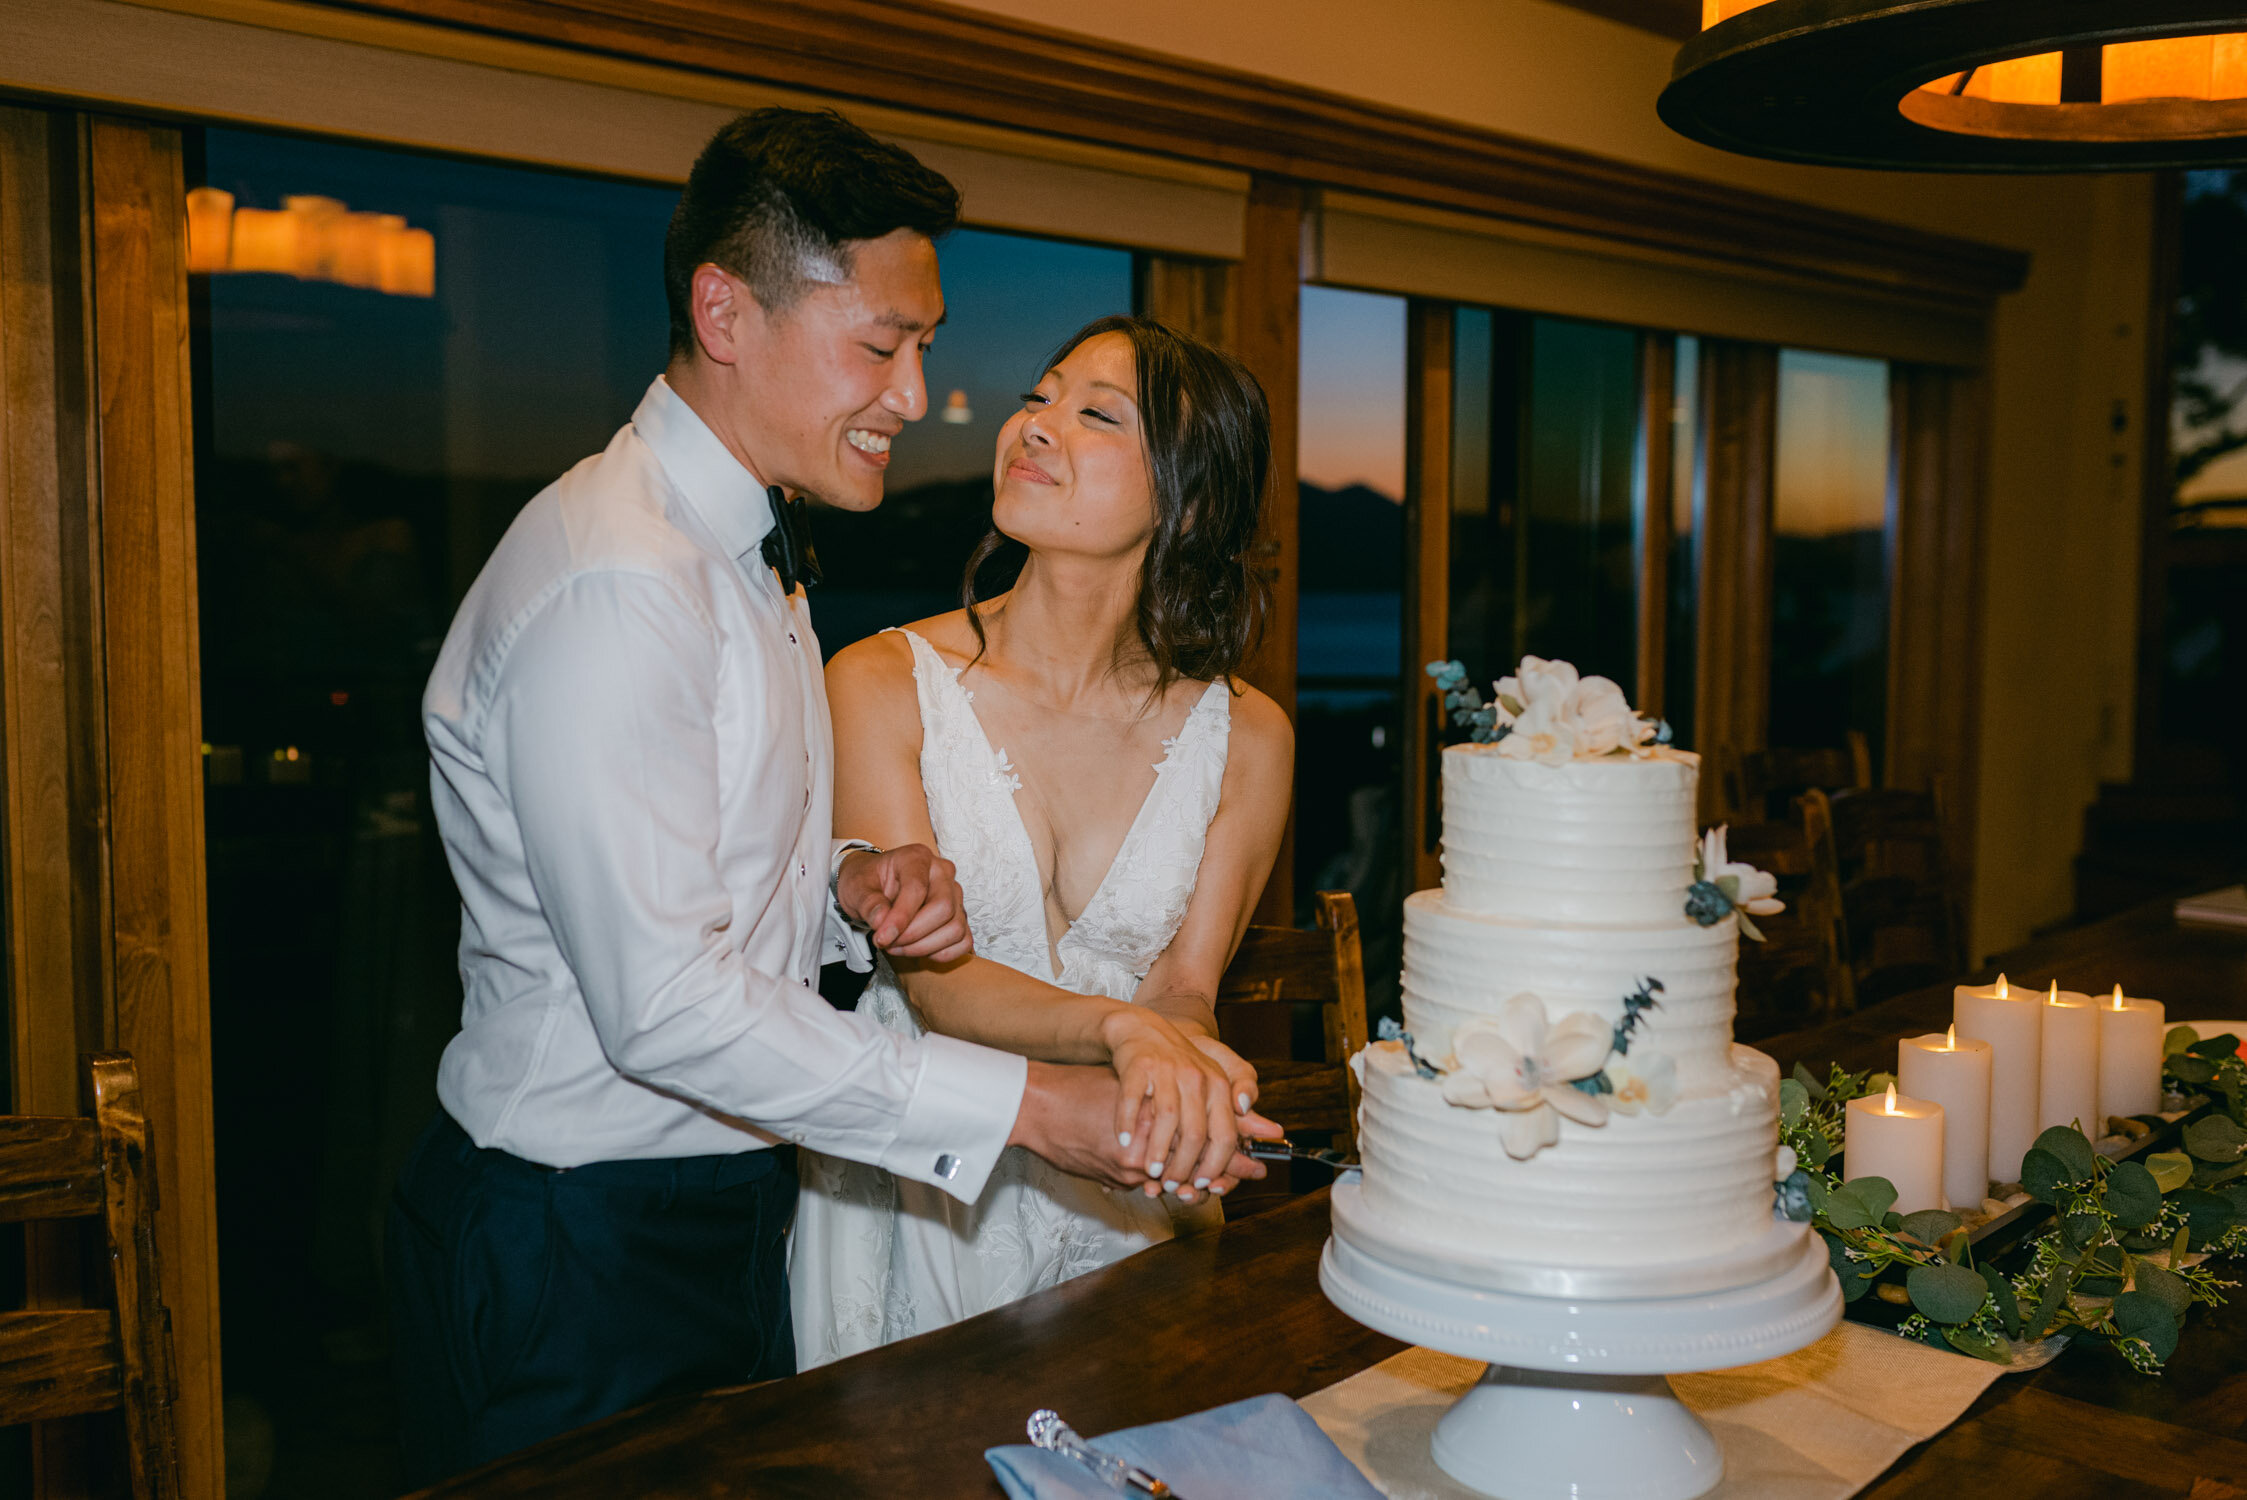 Tahoe Blue Estate Wedding Reception Photo, couple cutting the cake